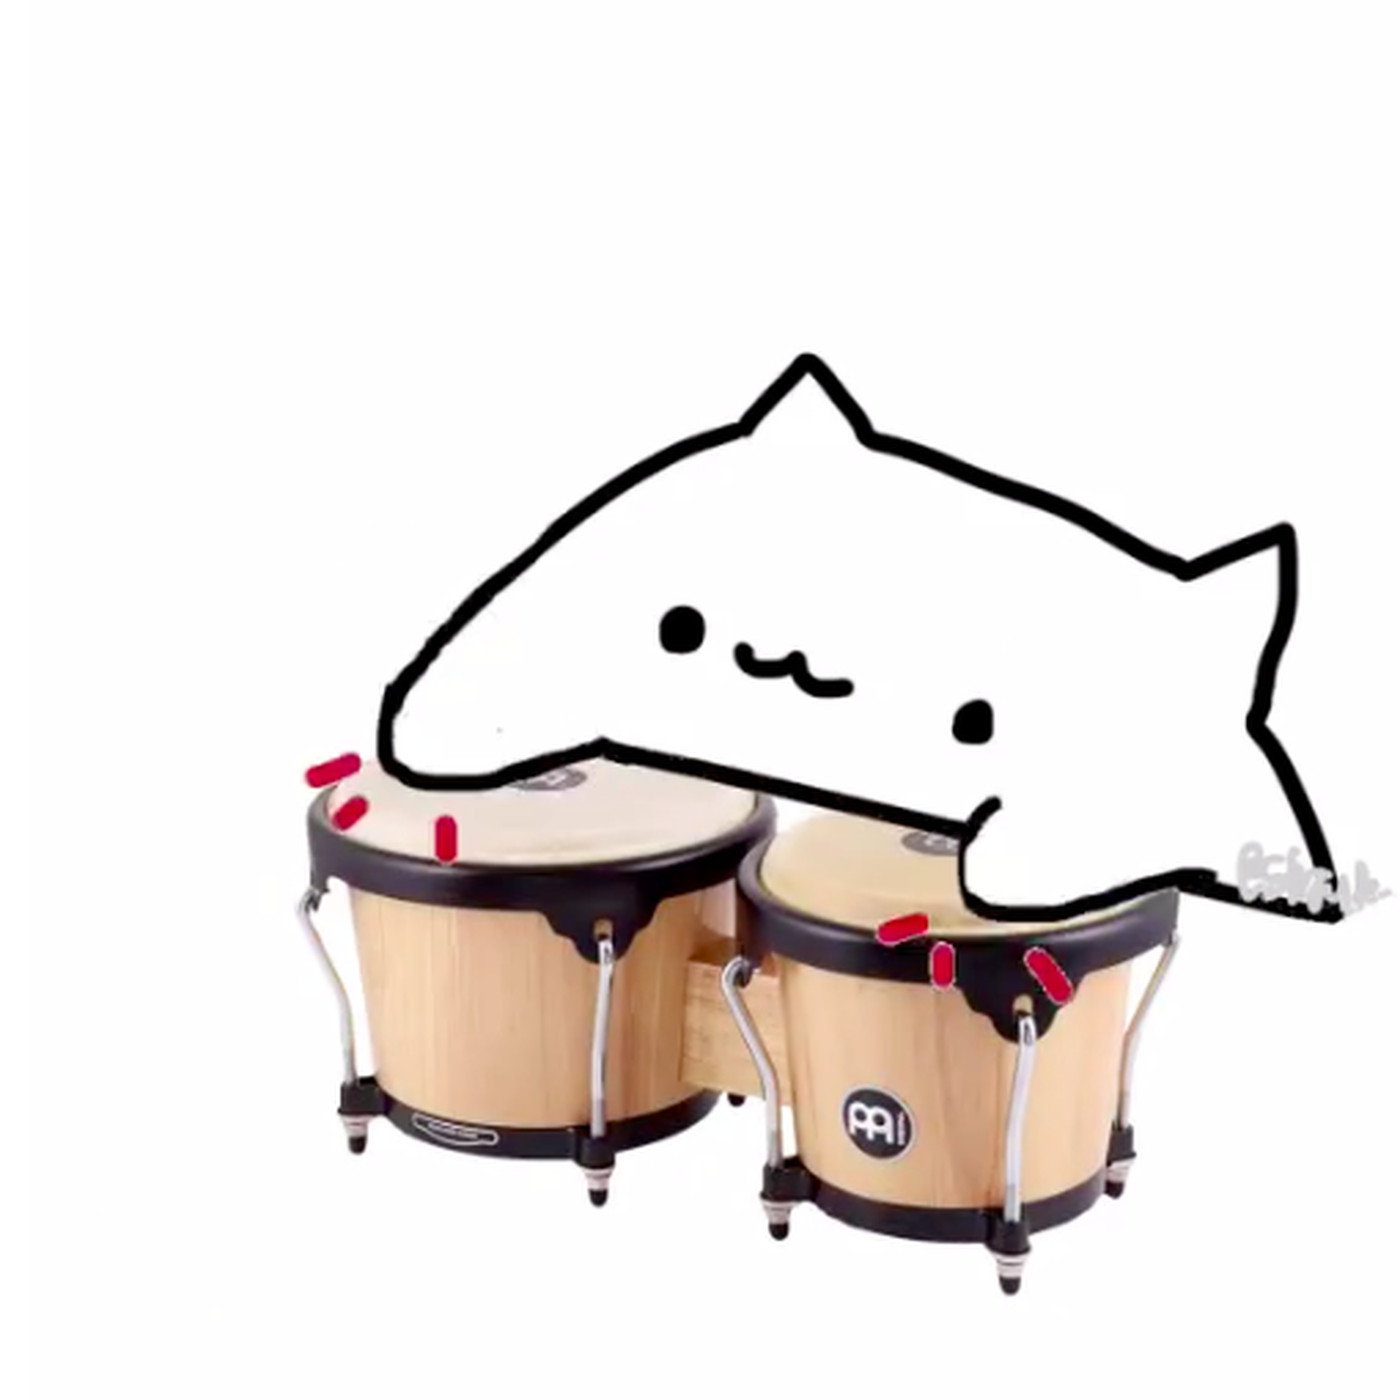 All hail bongo cat - The Verge